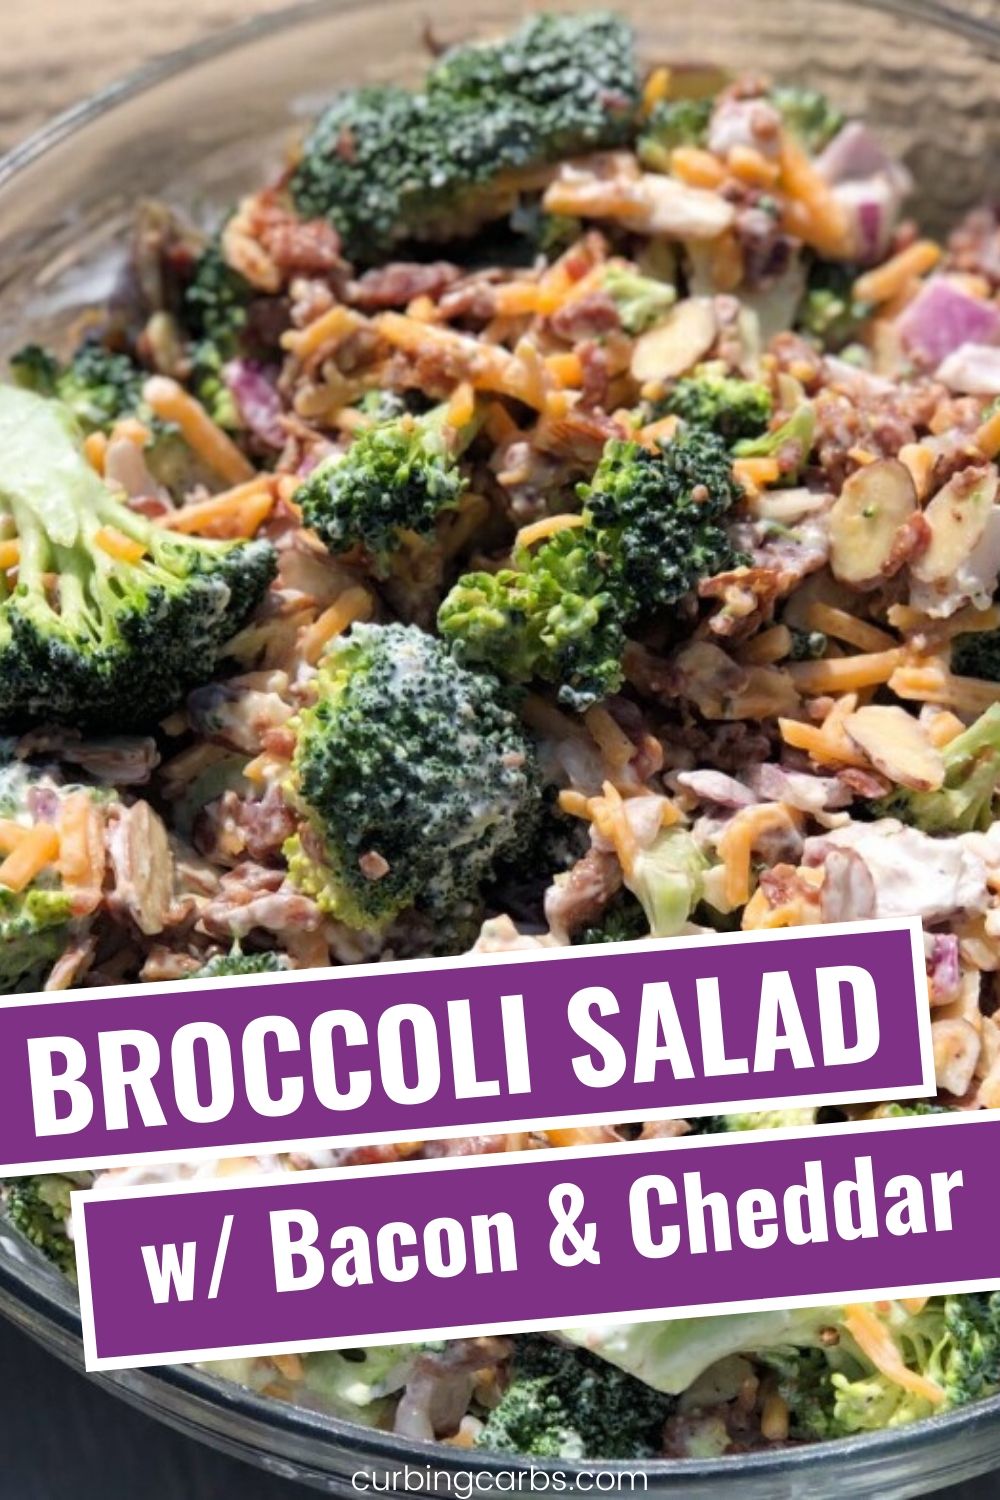 Broccoli Salad with Bacon & Cheddar